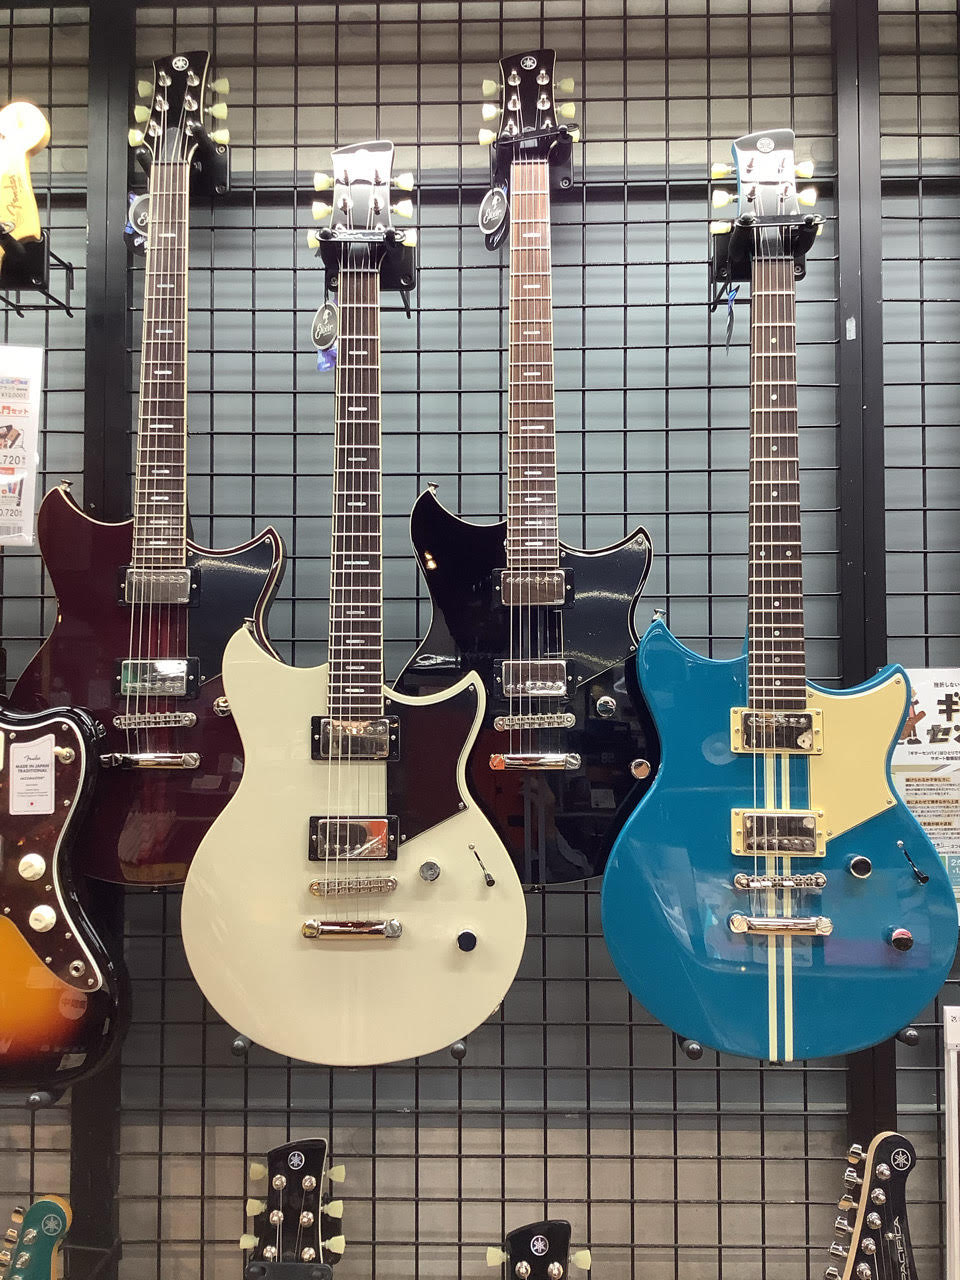 REVSTARは、日本の革新性と伝統的な職人技をバランスよく融合させています。1966年まで遡るヤマハエレクトリックギターの歴史を踏襲しつつ、演奏性・汎用性・音色を追求した現代的な機能を備えています。